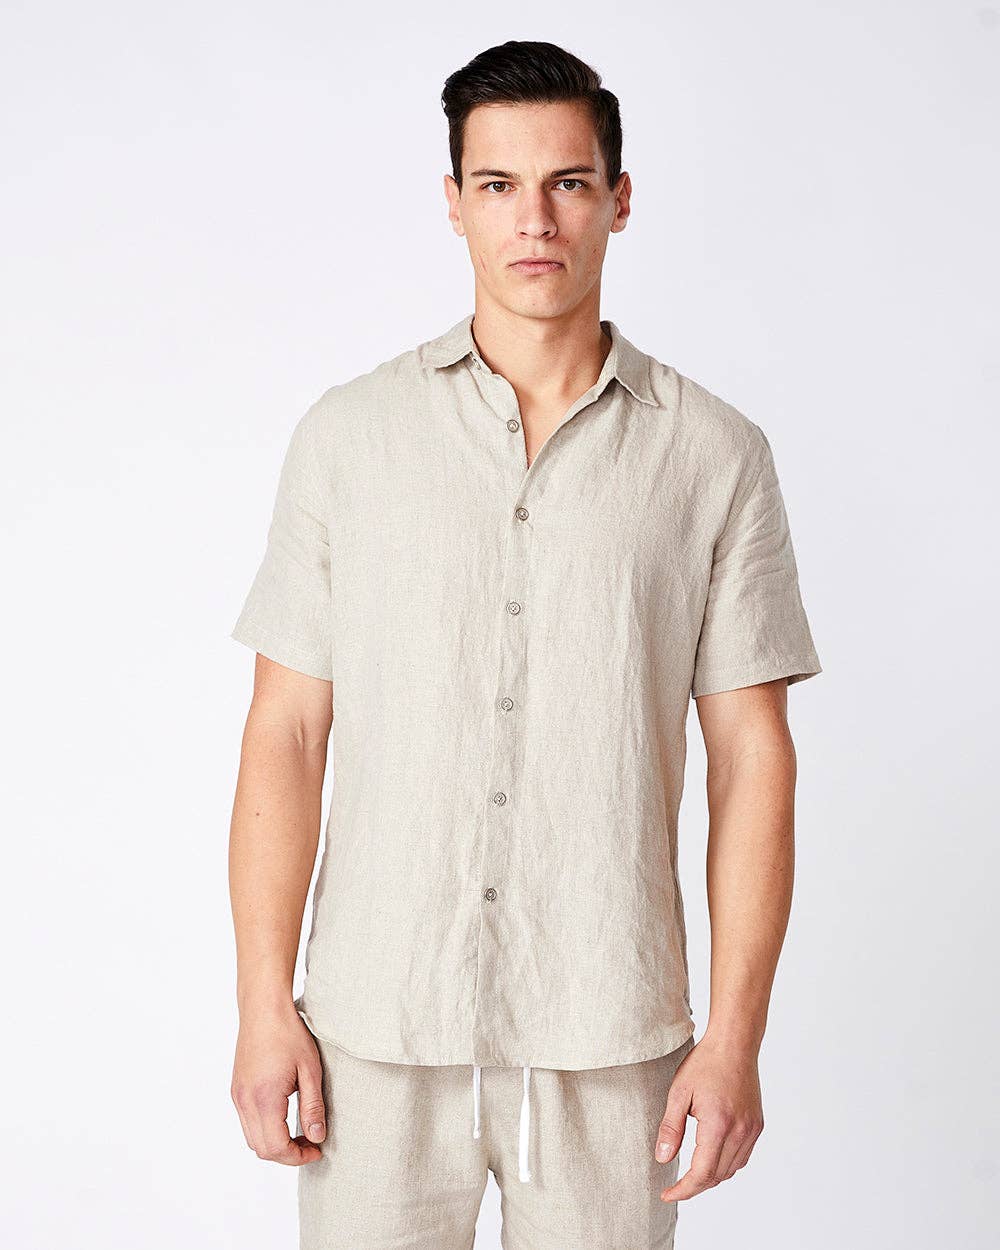 mens linen shirts breathable 